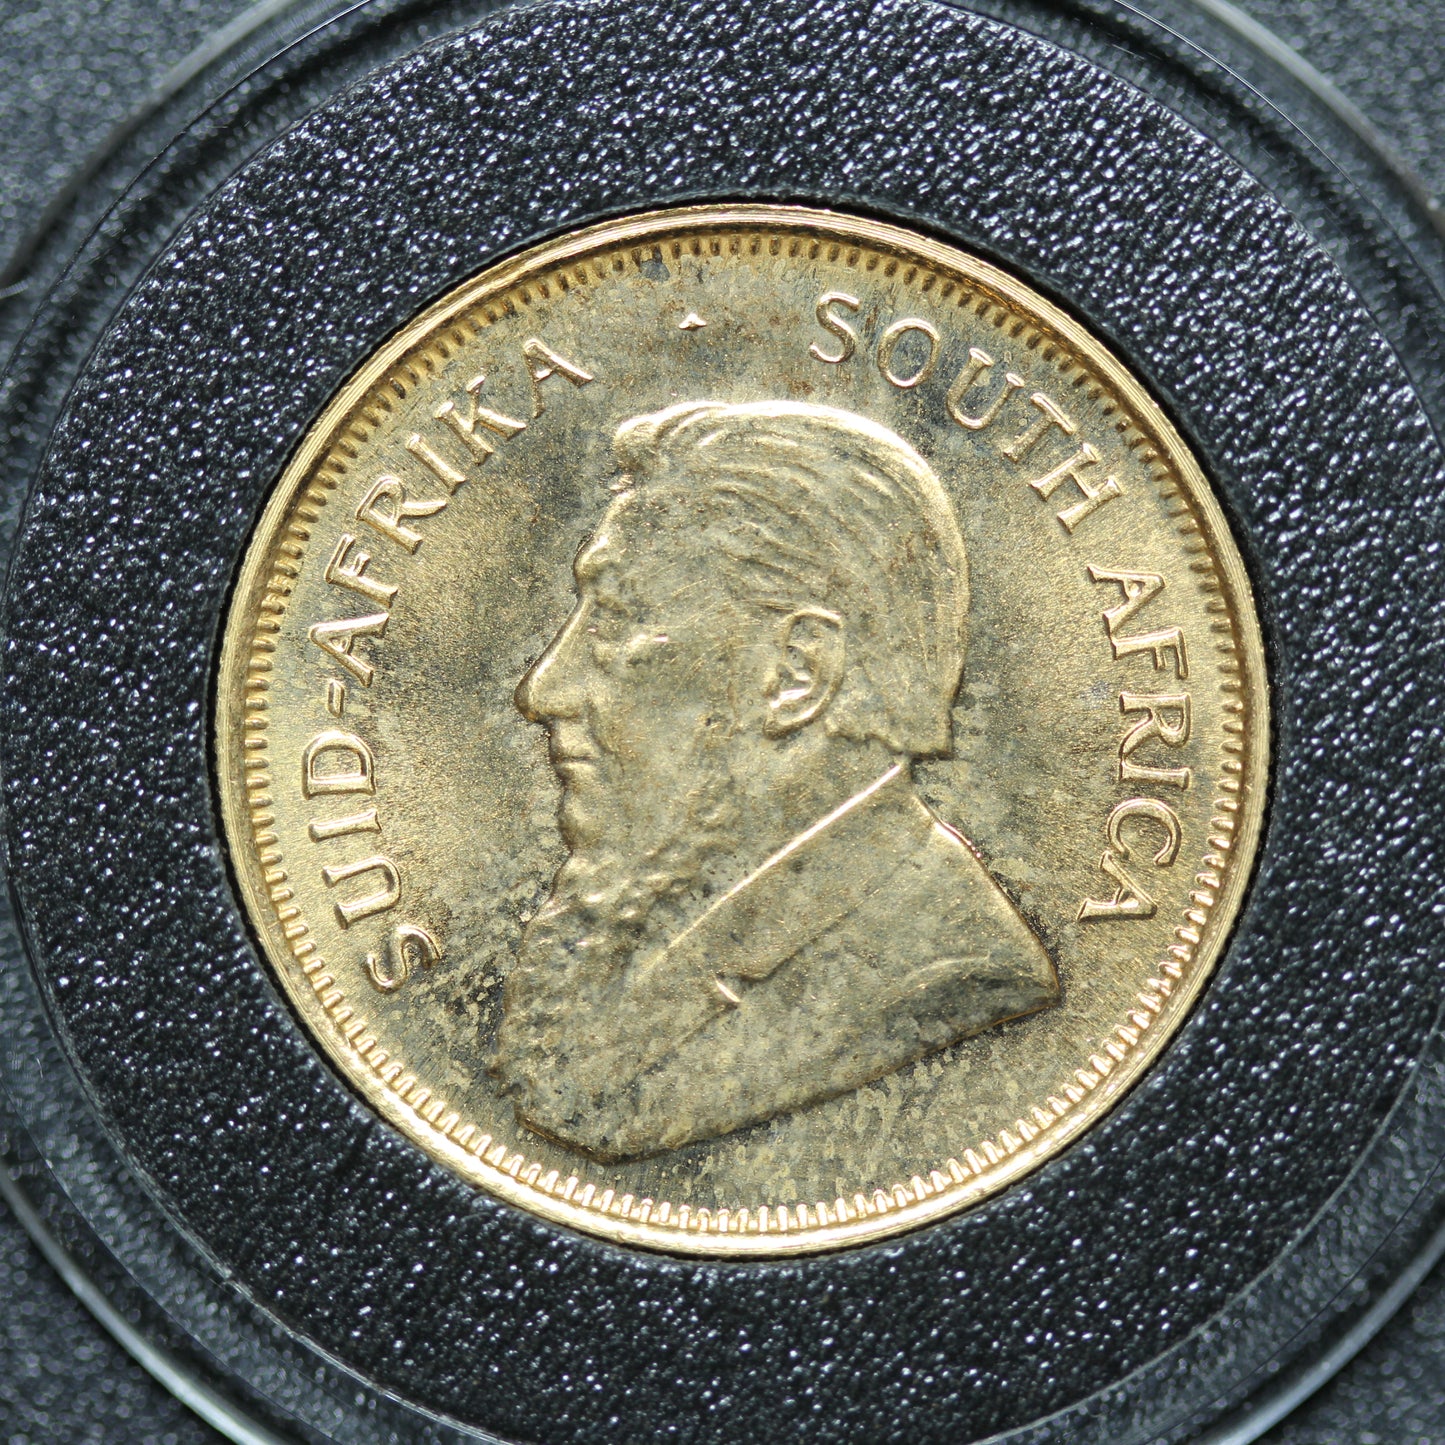 1980 1/4 oz South African Gold Krugerrand Bullion Coin w/ Capsule (#12)